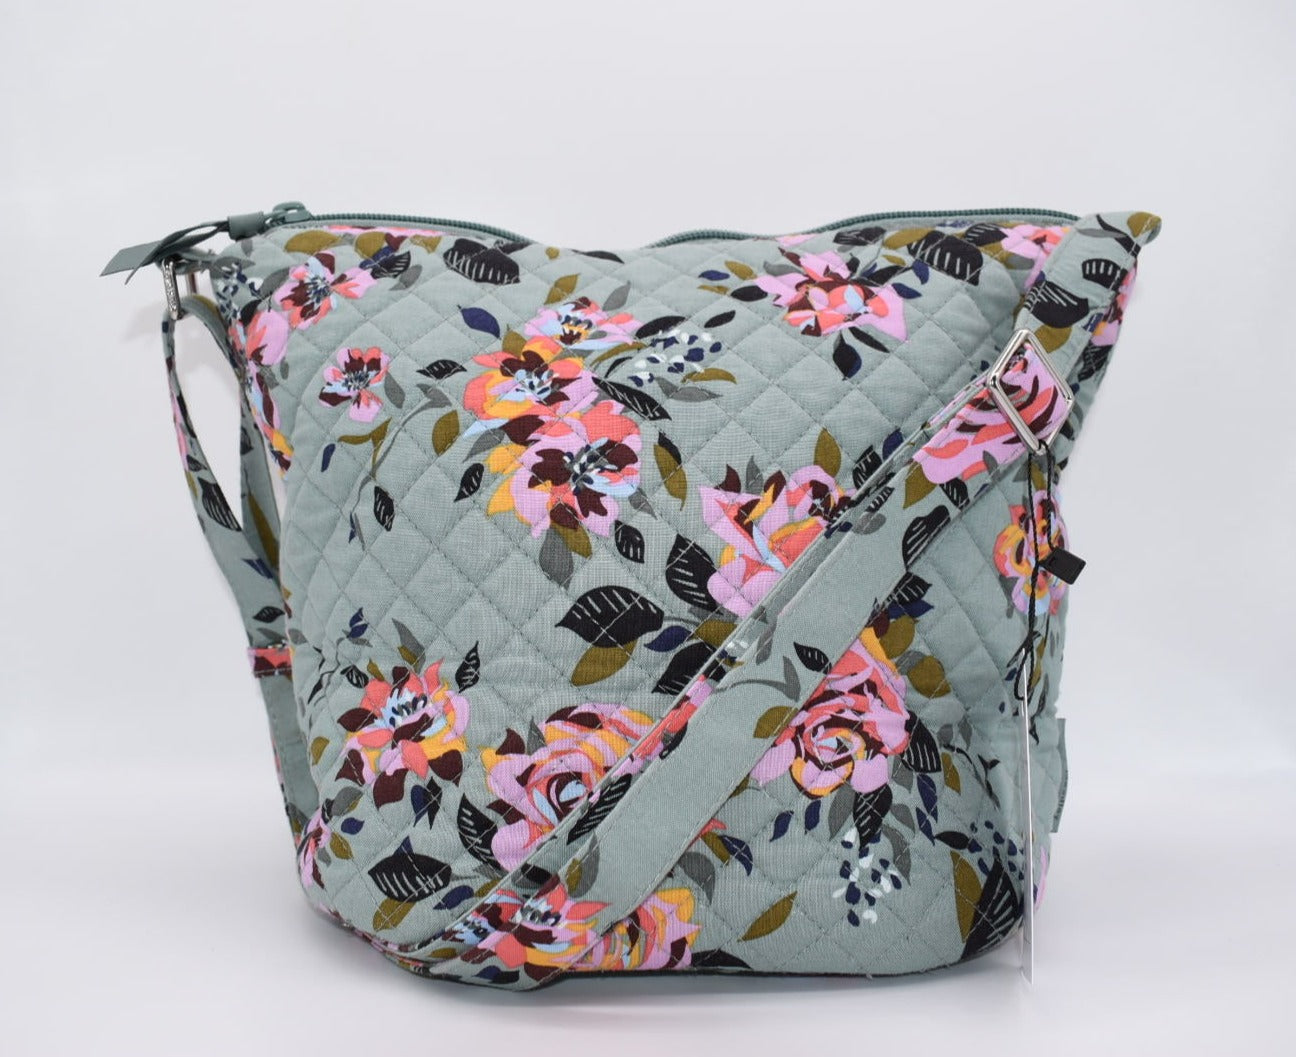 Vera Bradley Bucket Crossbody Bag in "Rosy Outlook" Pattern